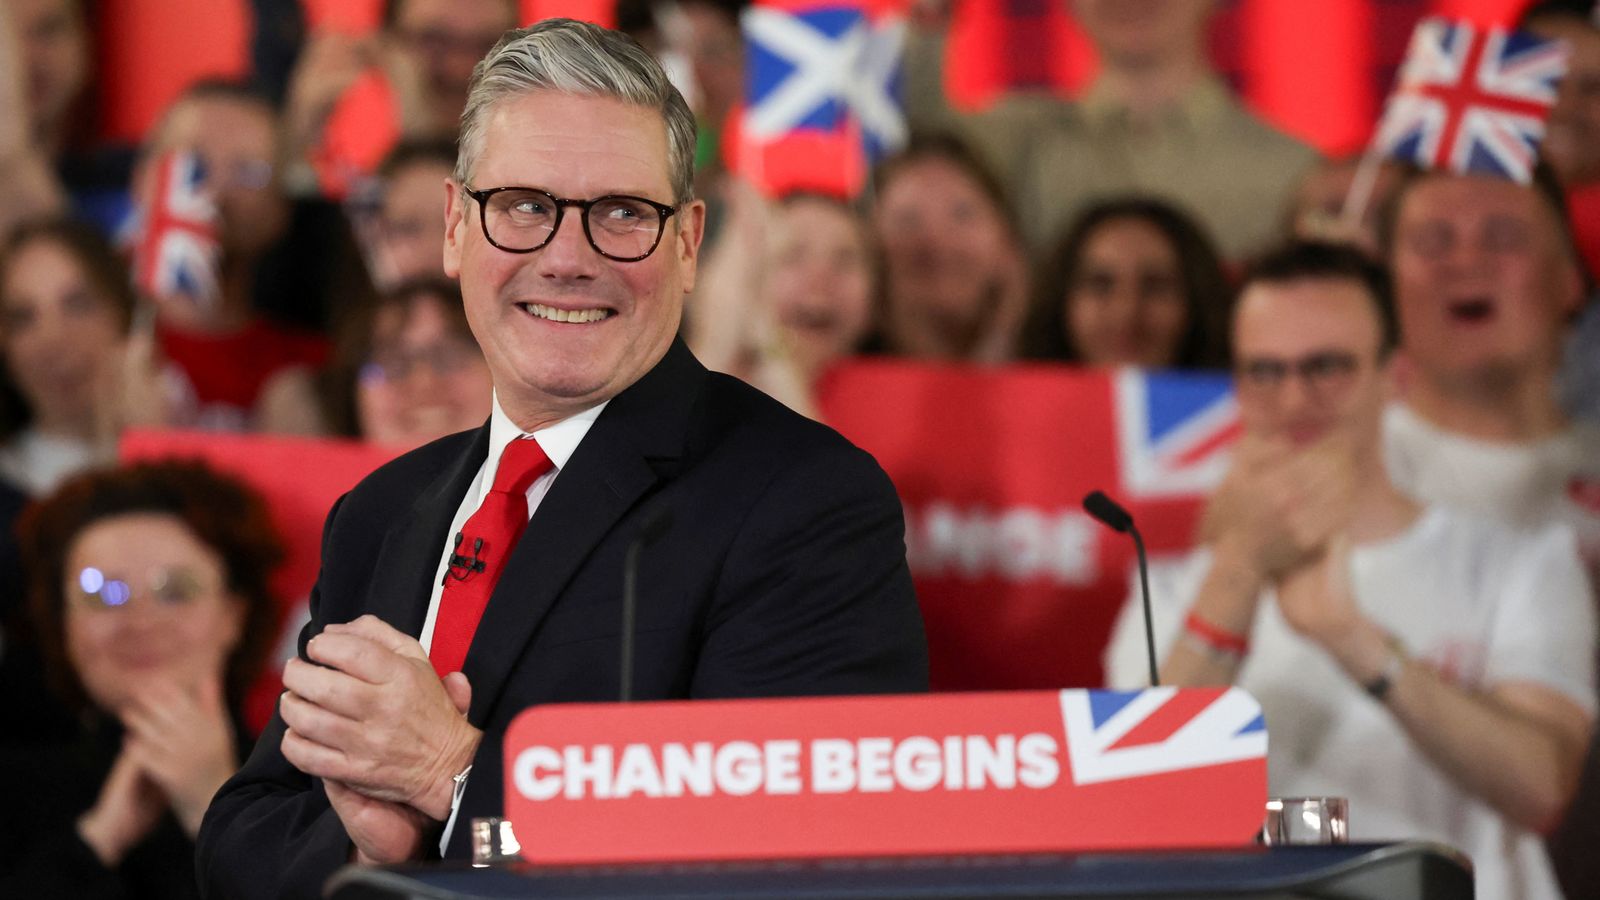 'Change begins now', Starmer says - as Labour win historic landslide